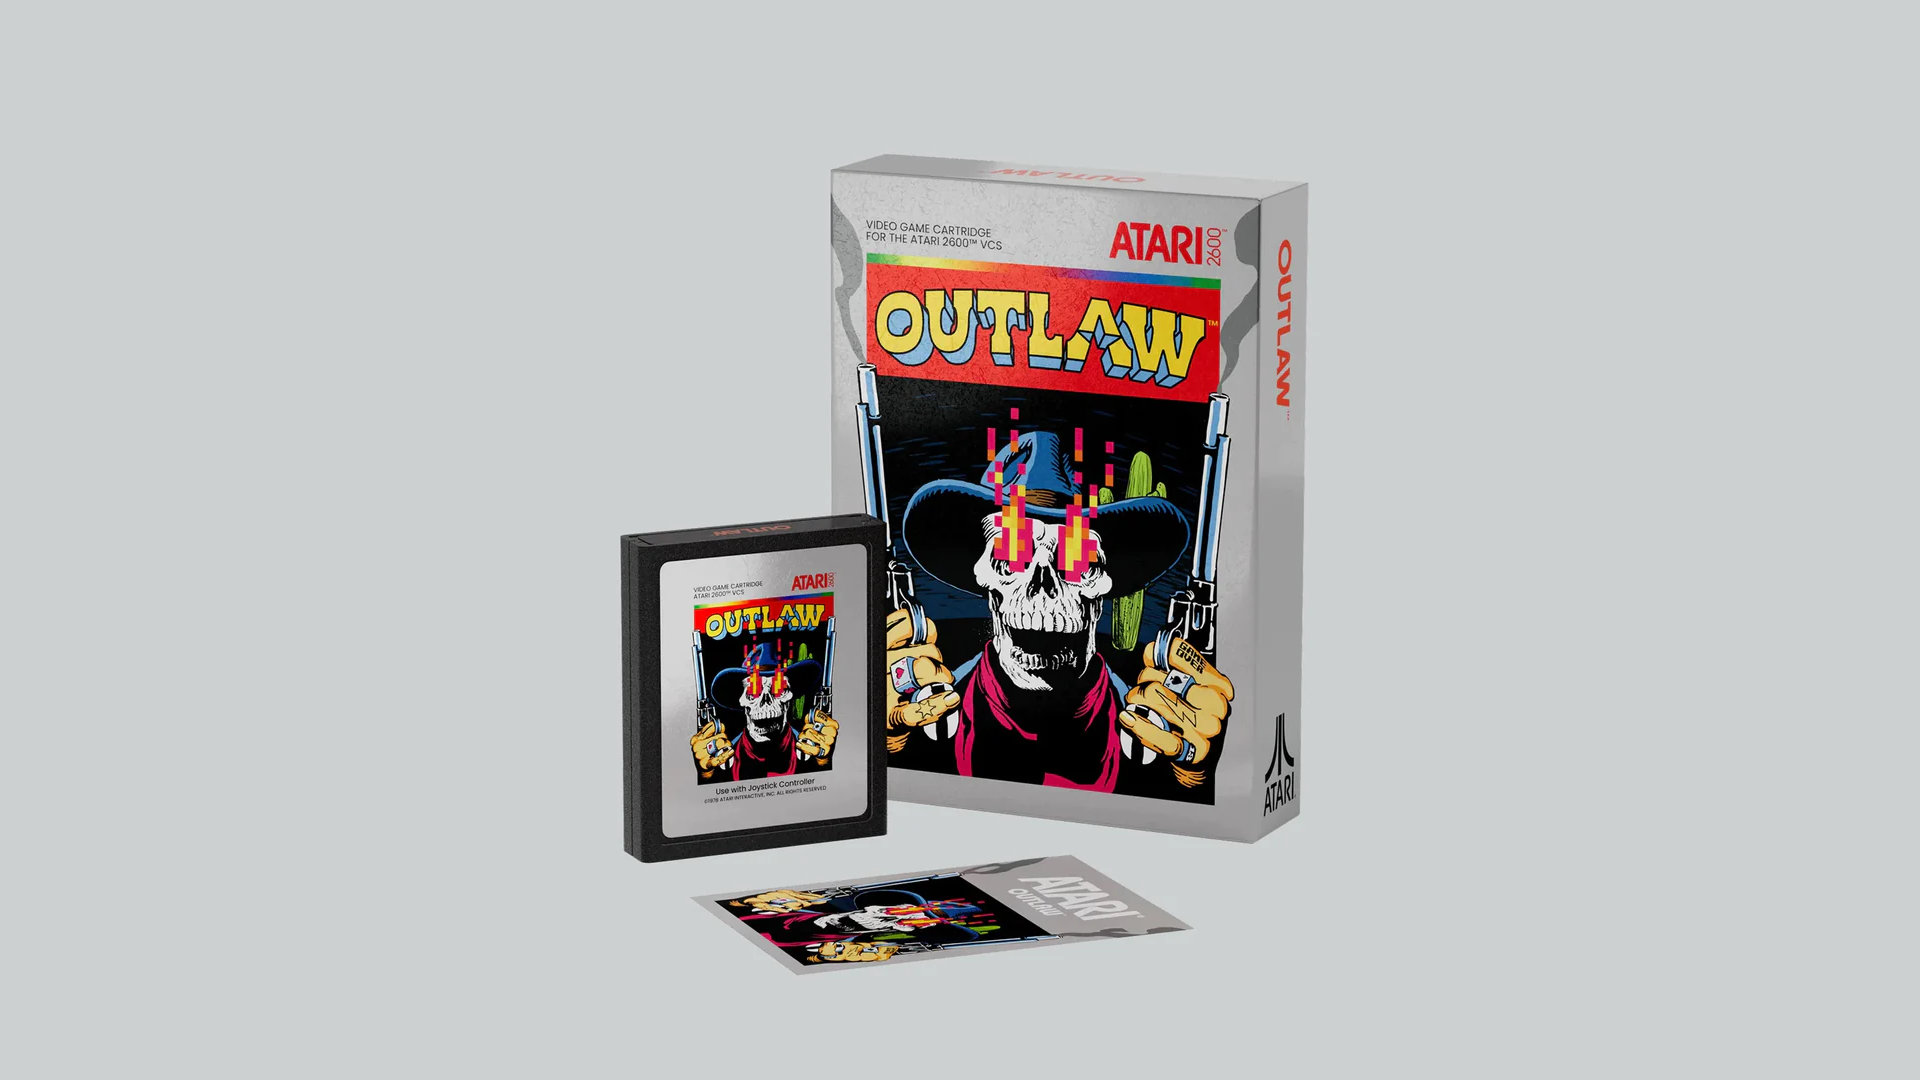 Atari: Outlaw erscheint erneut für den Atari 2600